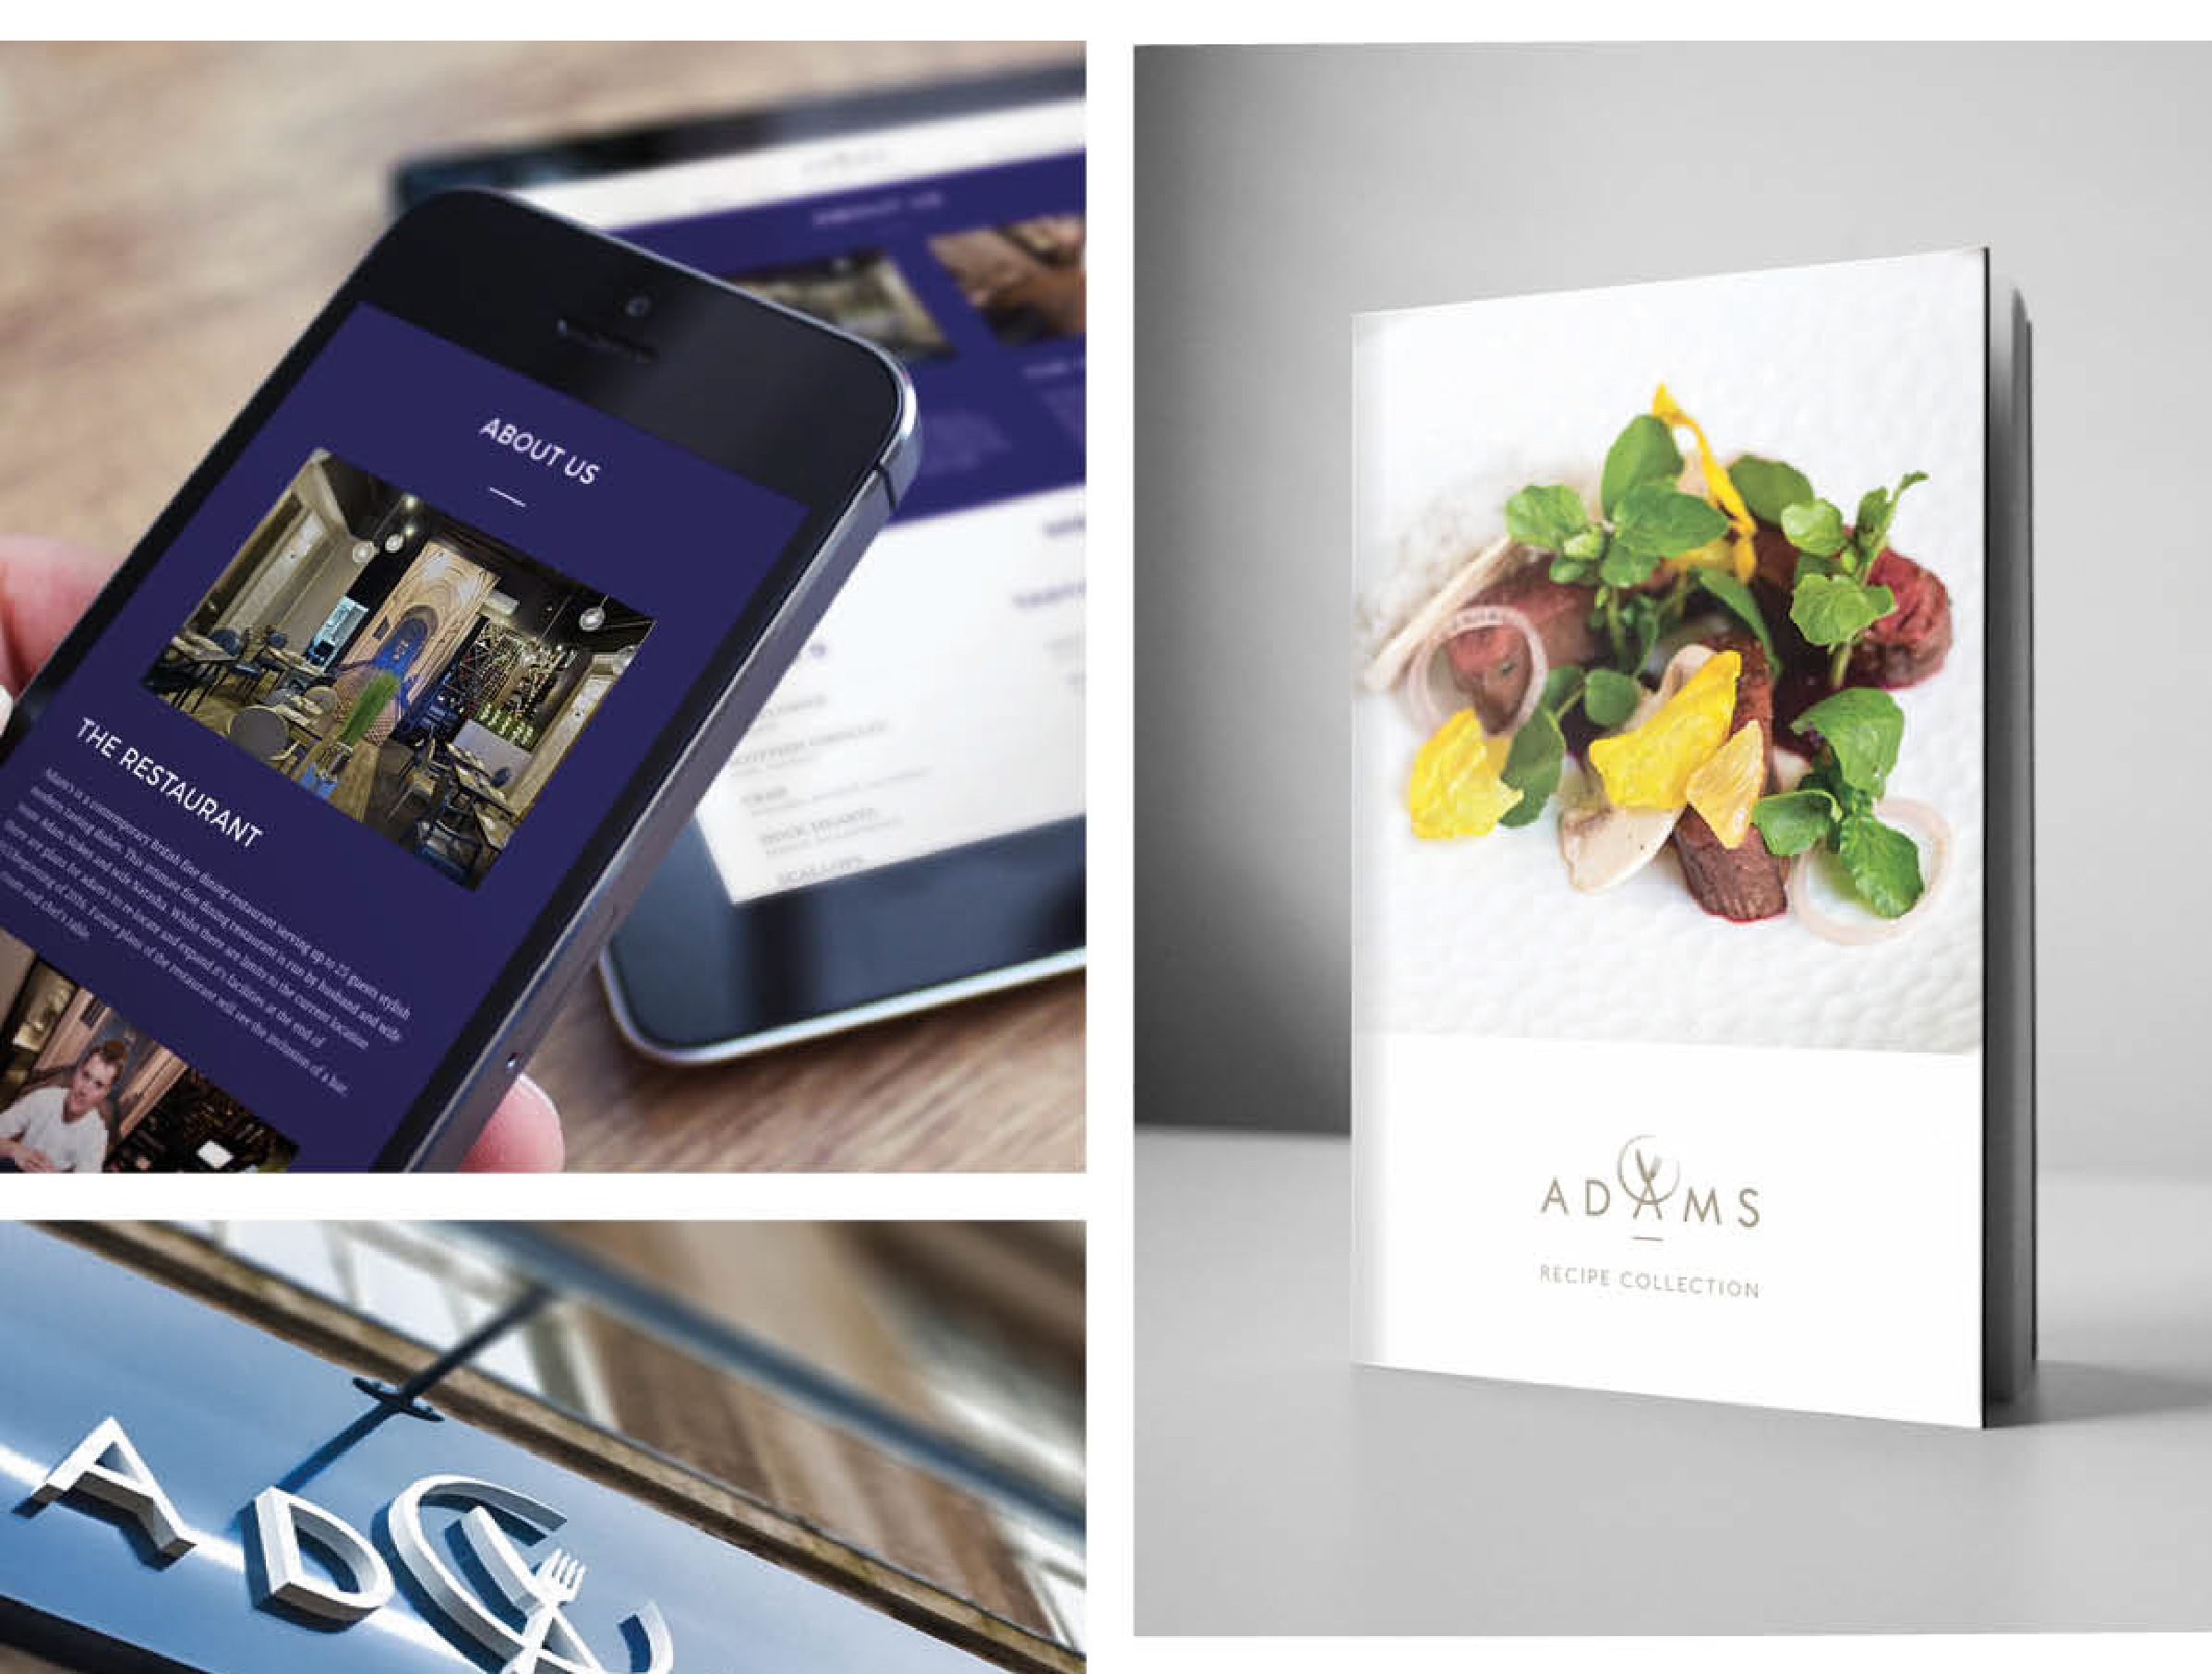 Adam's restaurant brand by IE Brand on website, menus, signage and uniforms